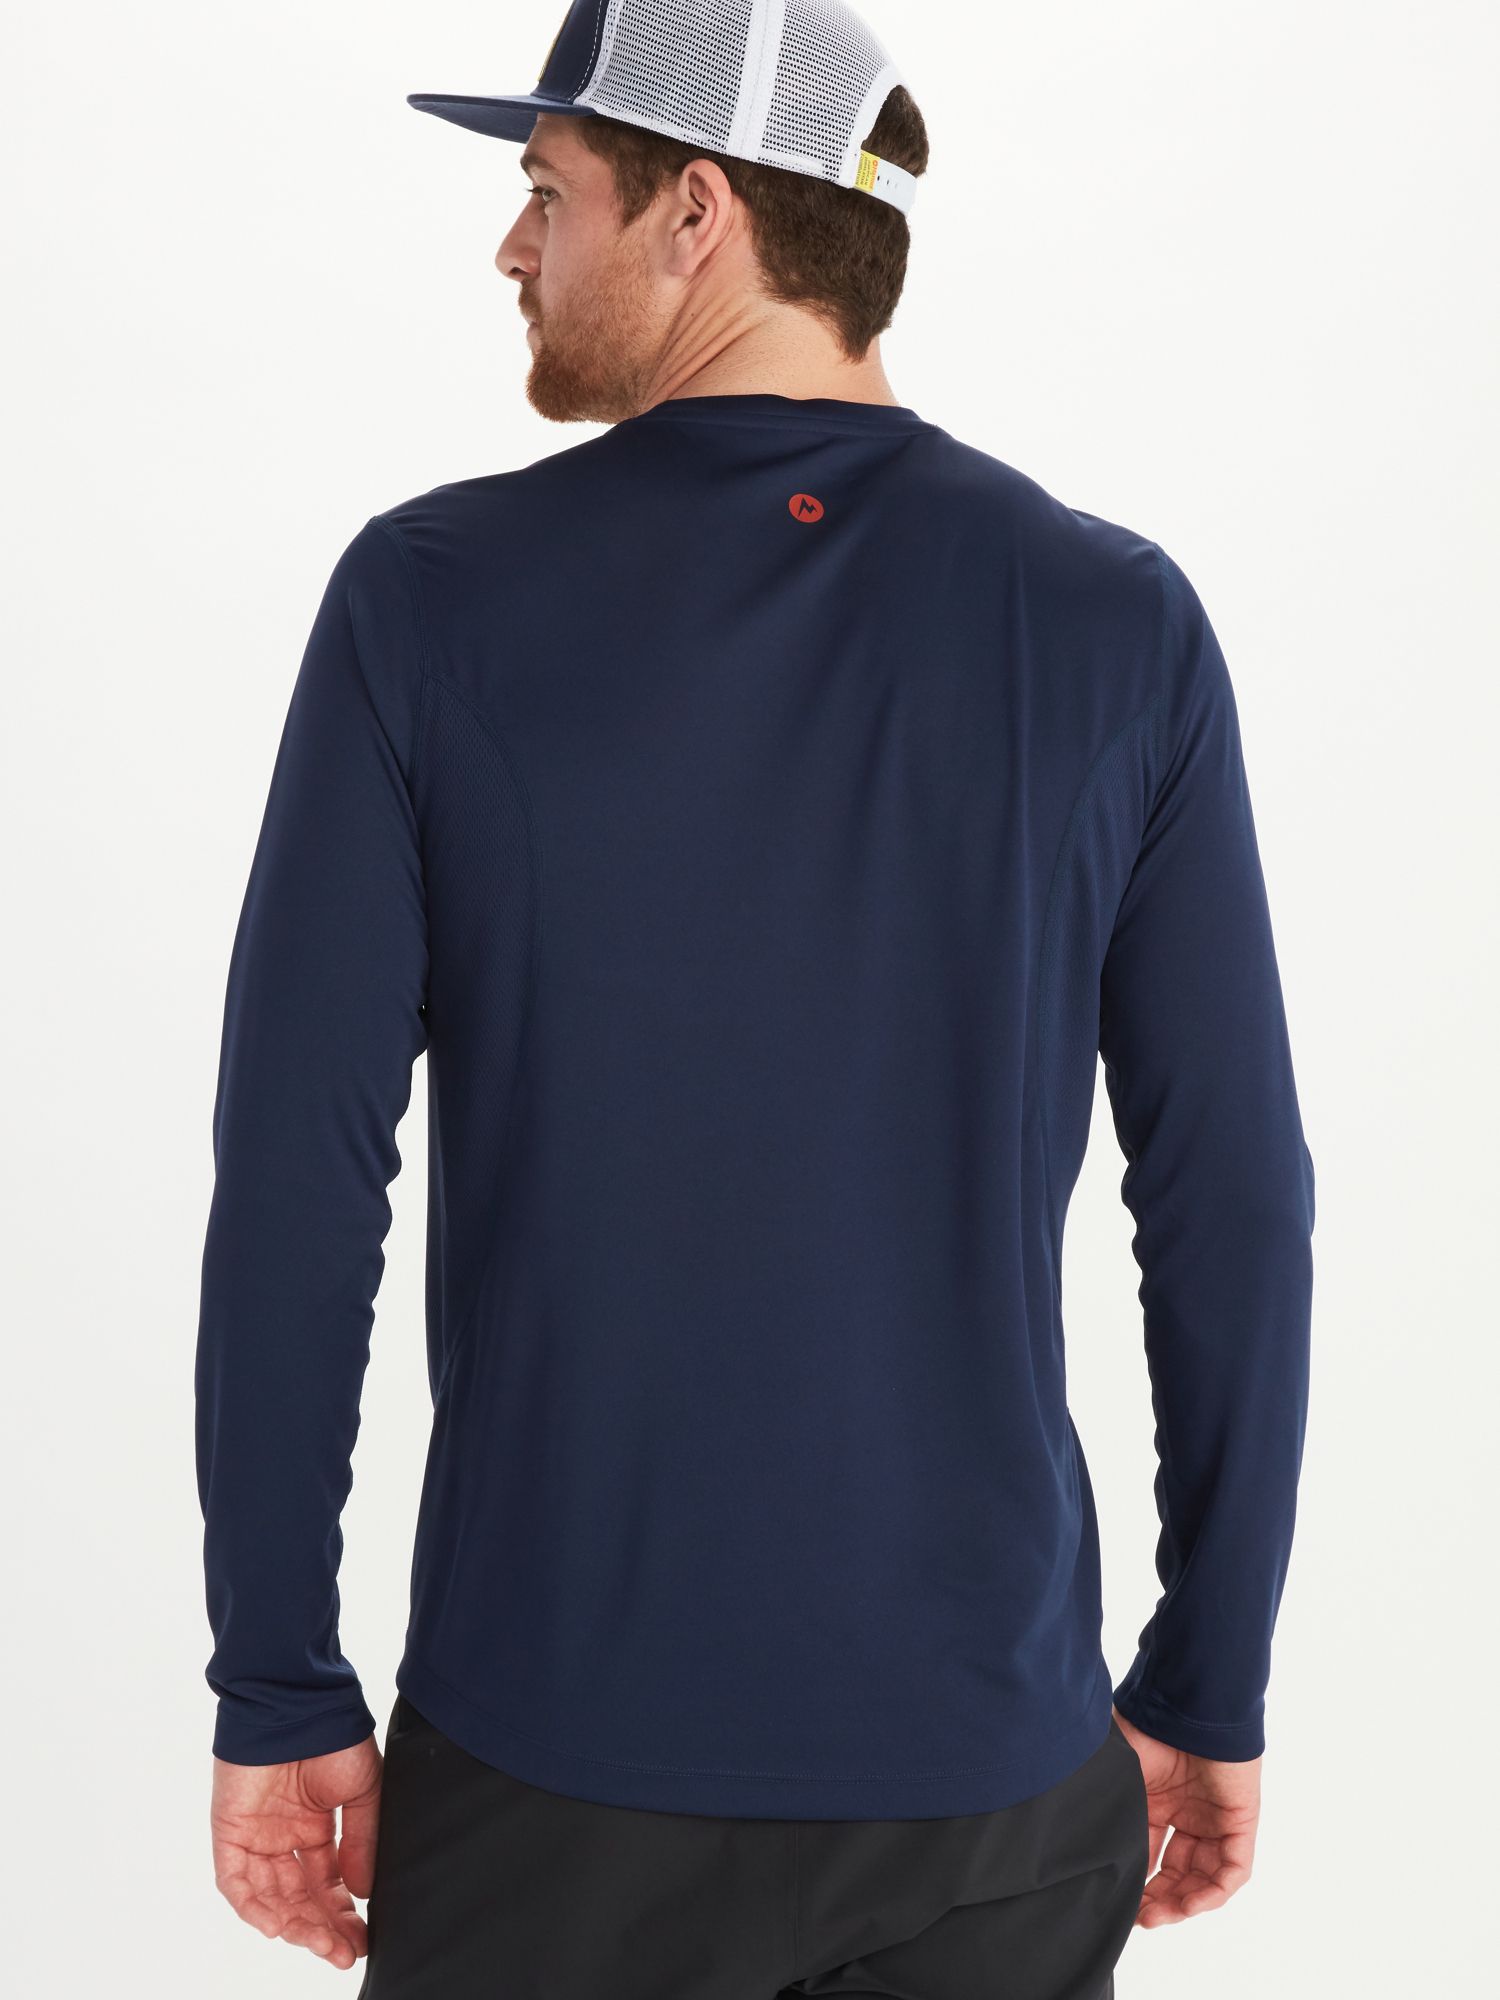 Men's Windridge Graphic Long-Sleeve Shirt